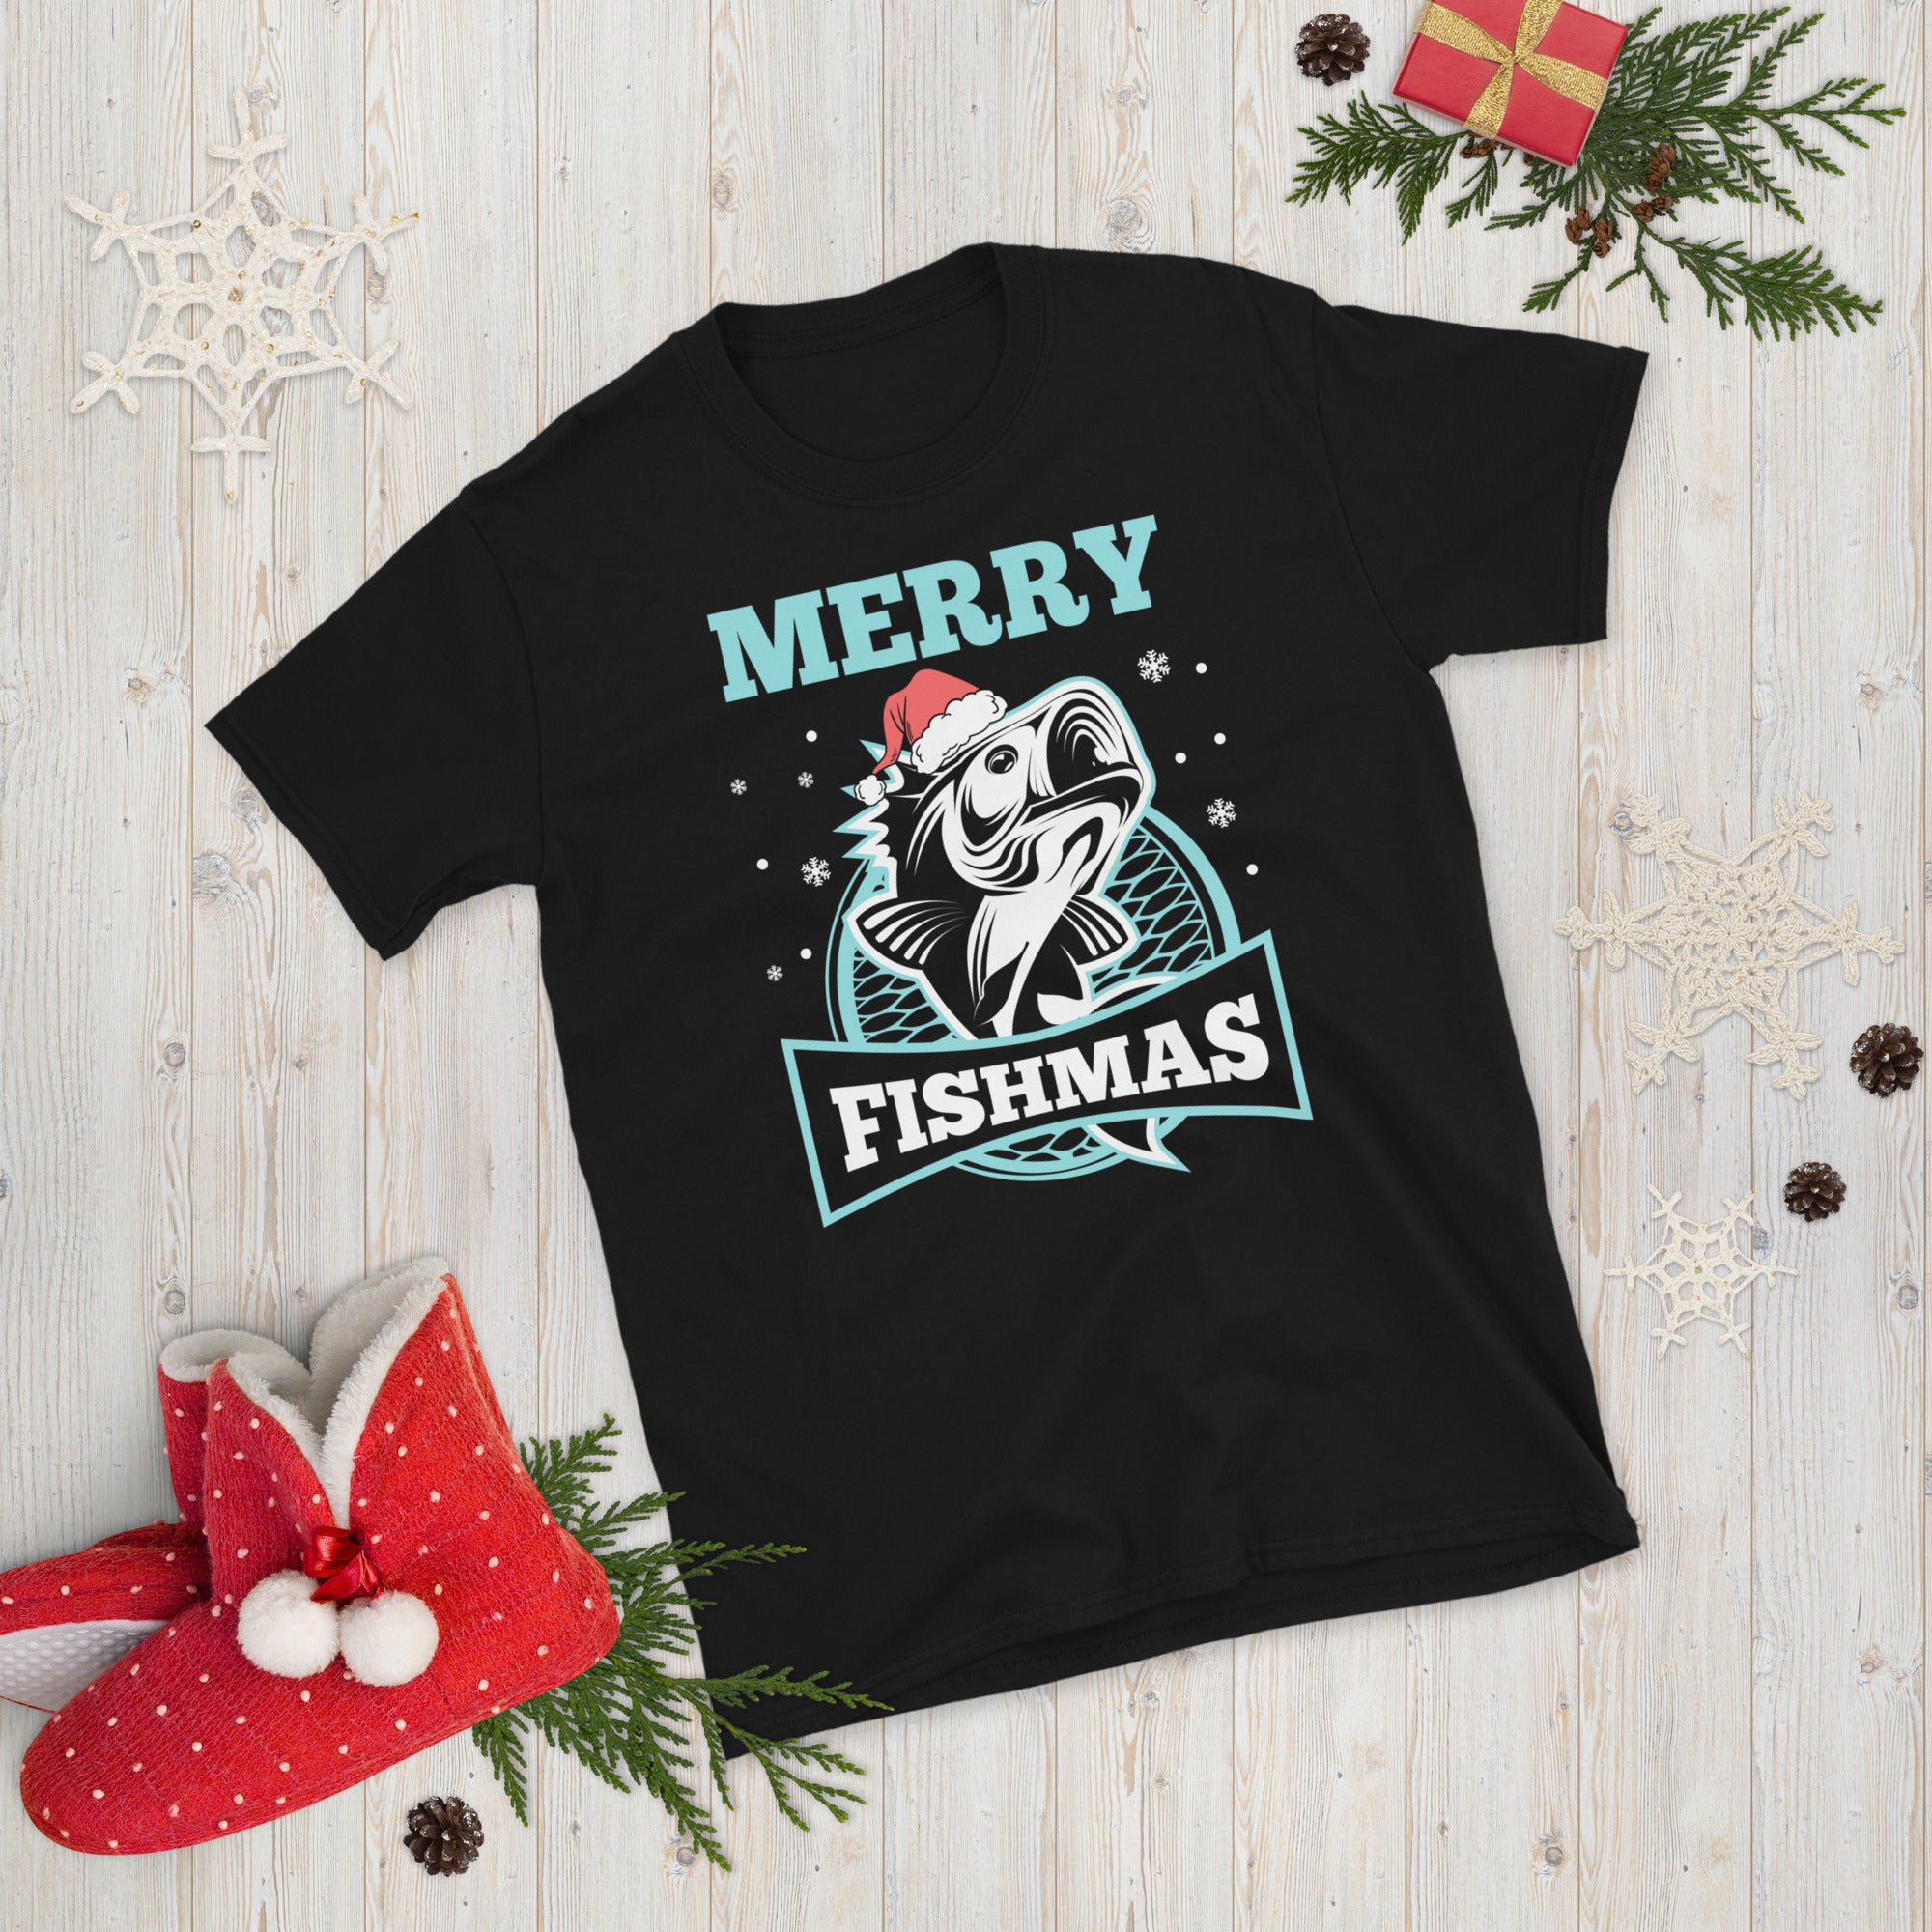 Merry Fishmas Shirt, Fishing Christmas T Shirt, Funny Fishing Shirt, Fishing Lover Shirt, Christmas Gift For Fisherman, Xmas Fishing Shirt - Madeinsea©